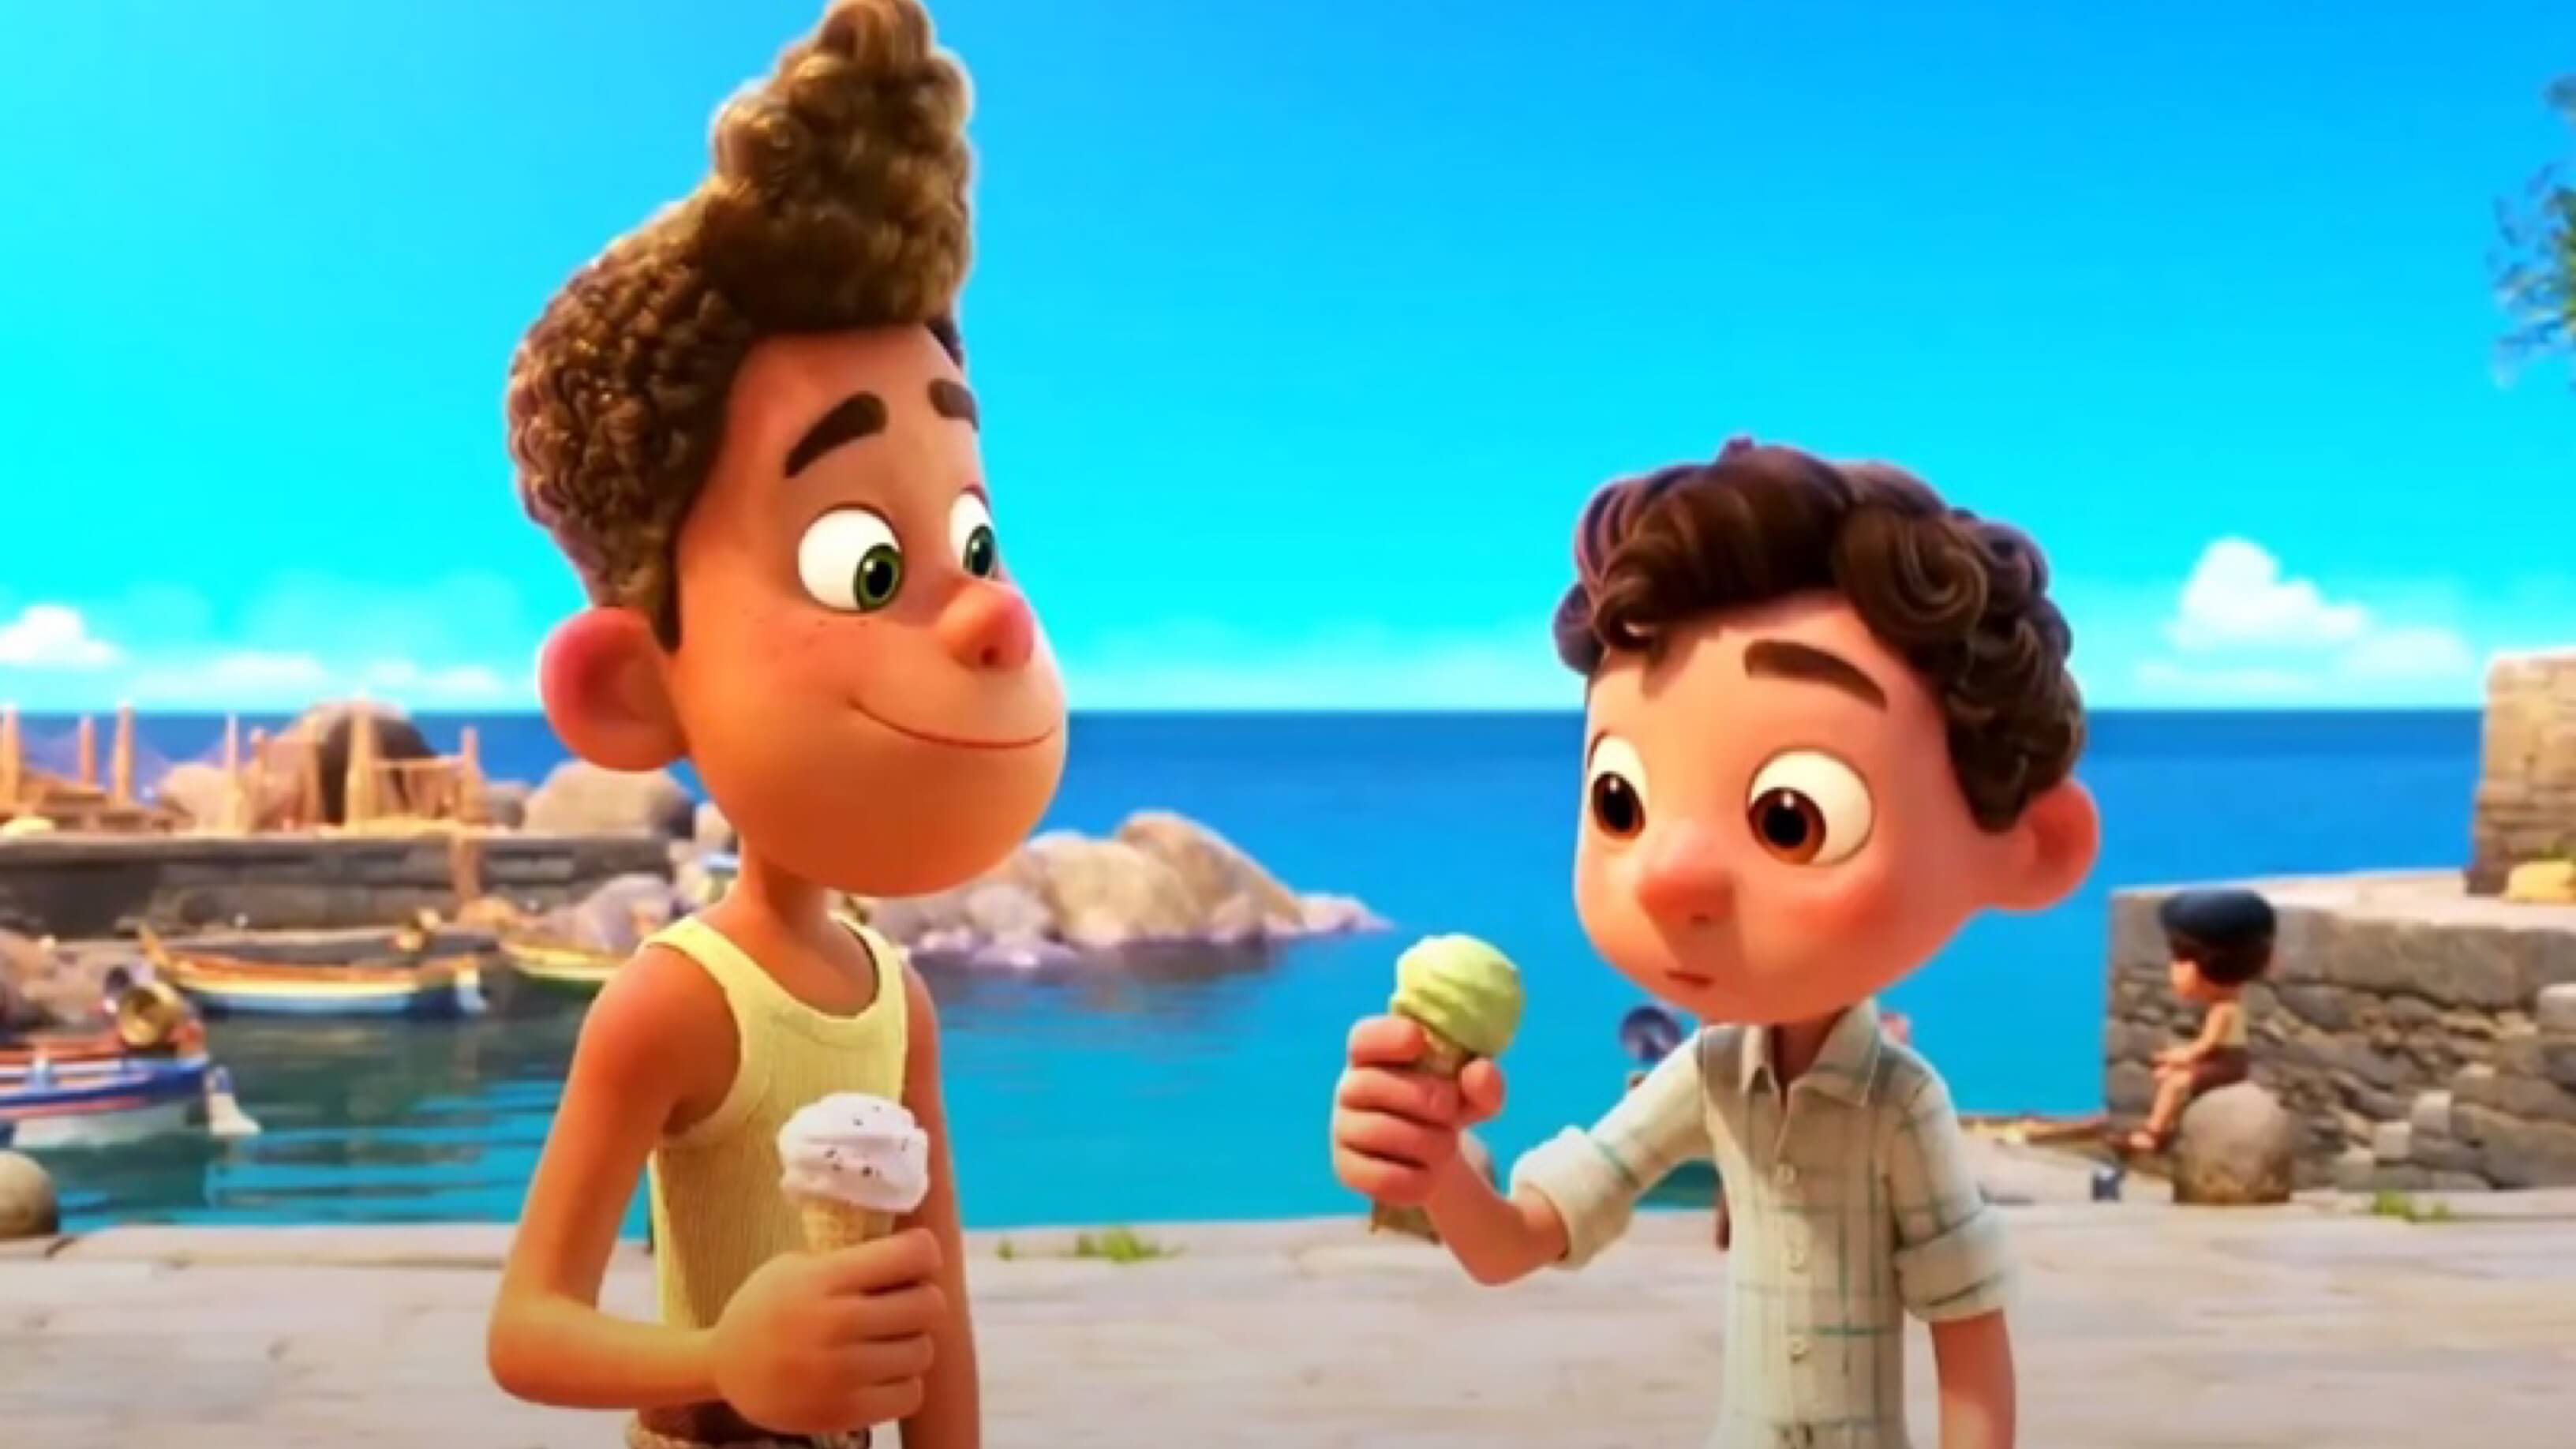 Pixar Releases Adorable Teaser Trailer For ‘Luca’